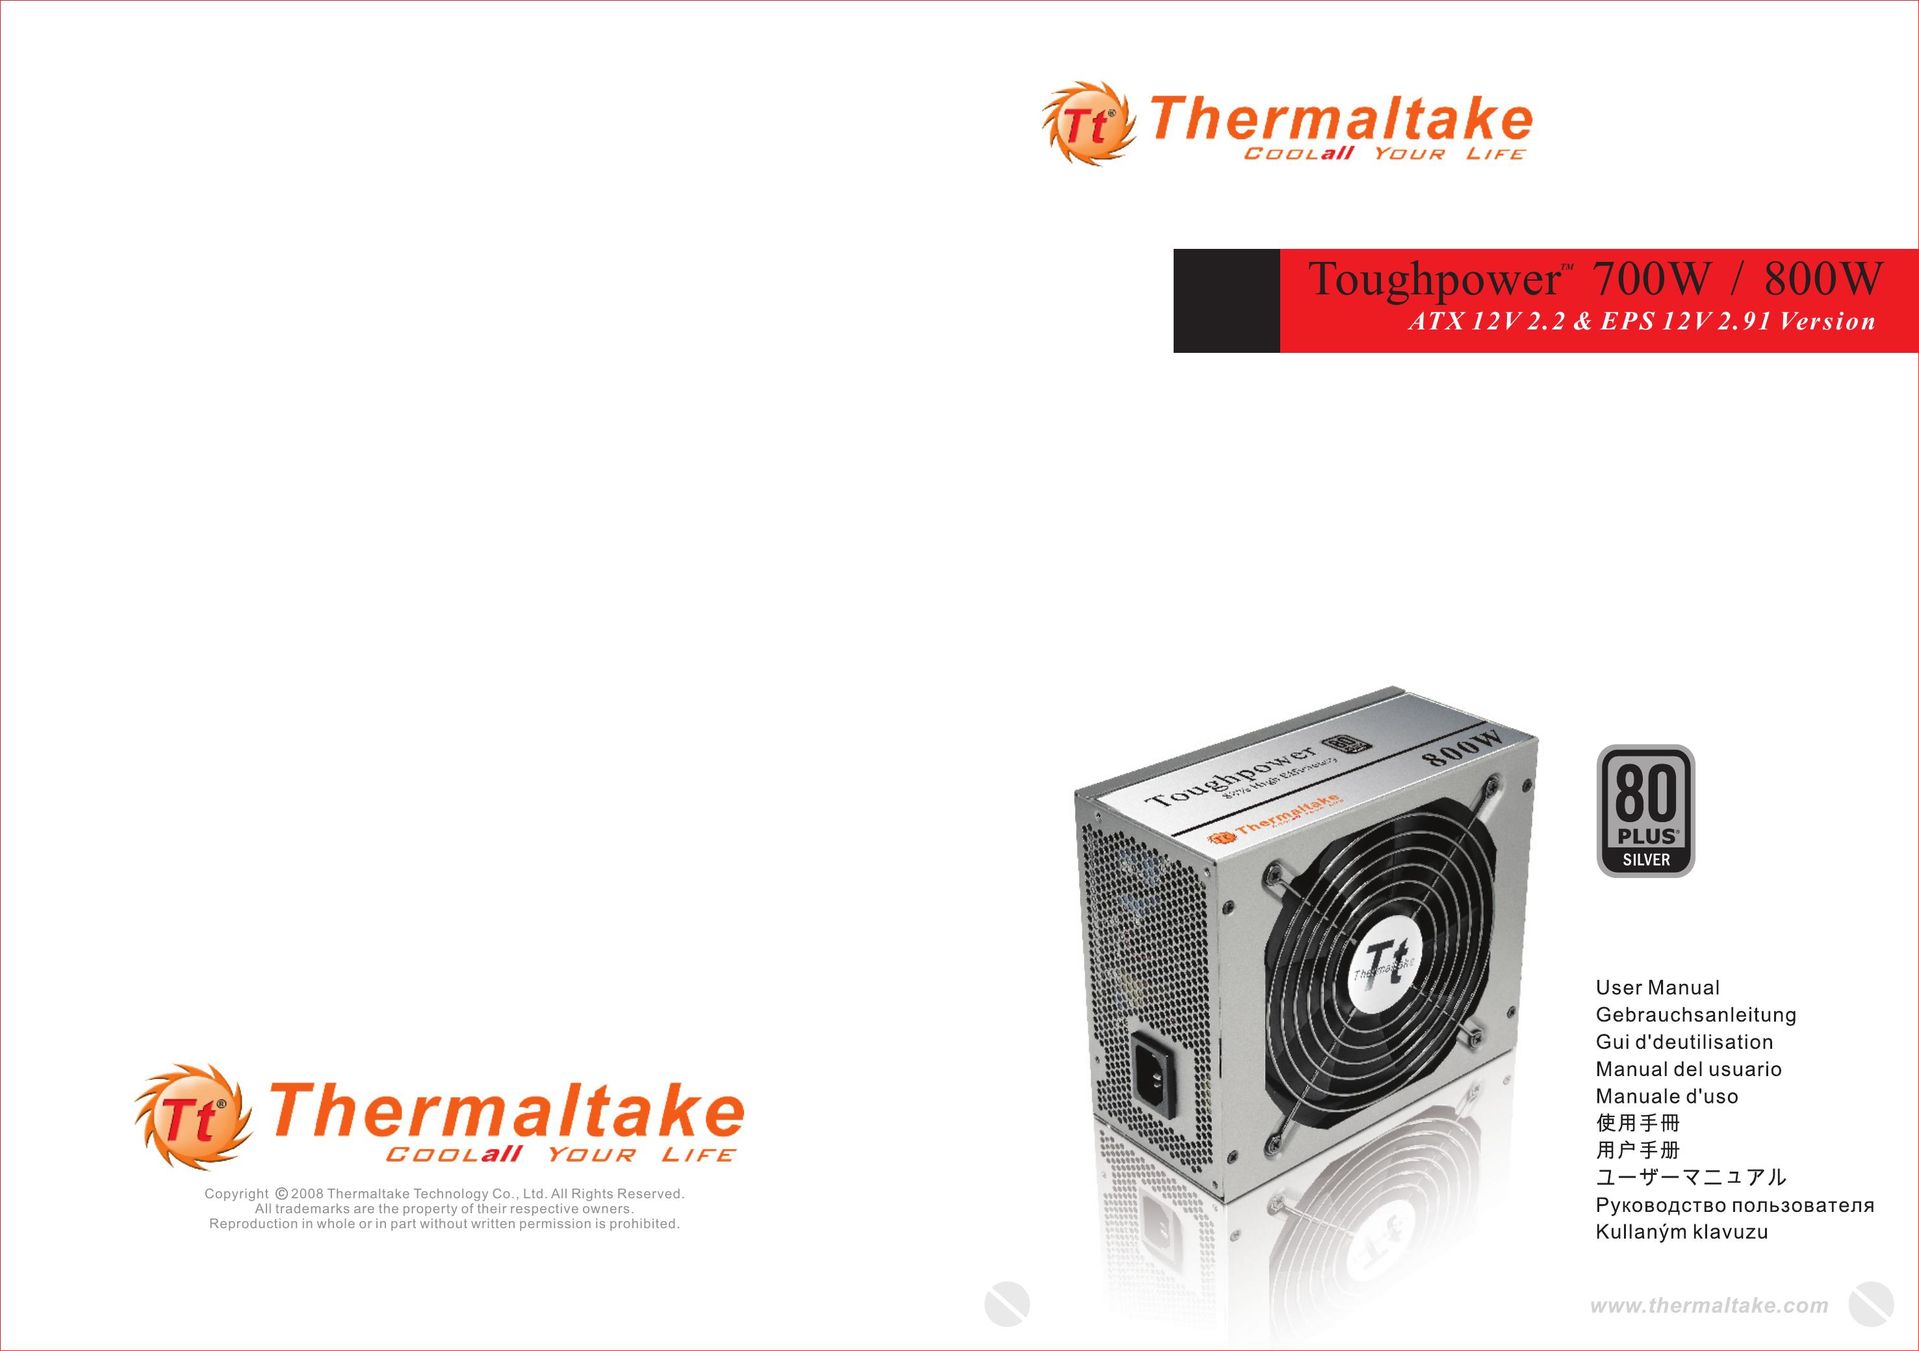 Thermaltake W0296 Power Supply User Manual